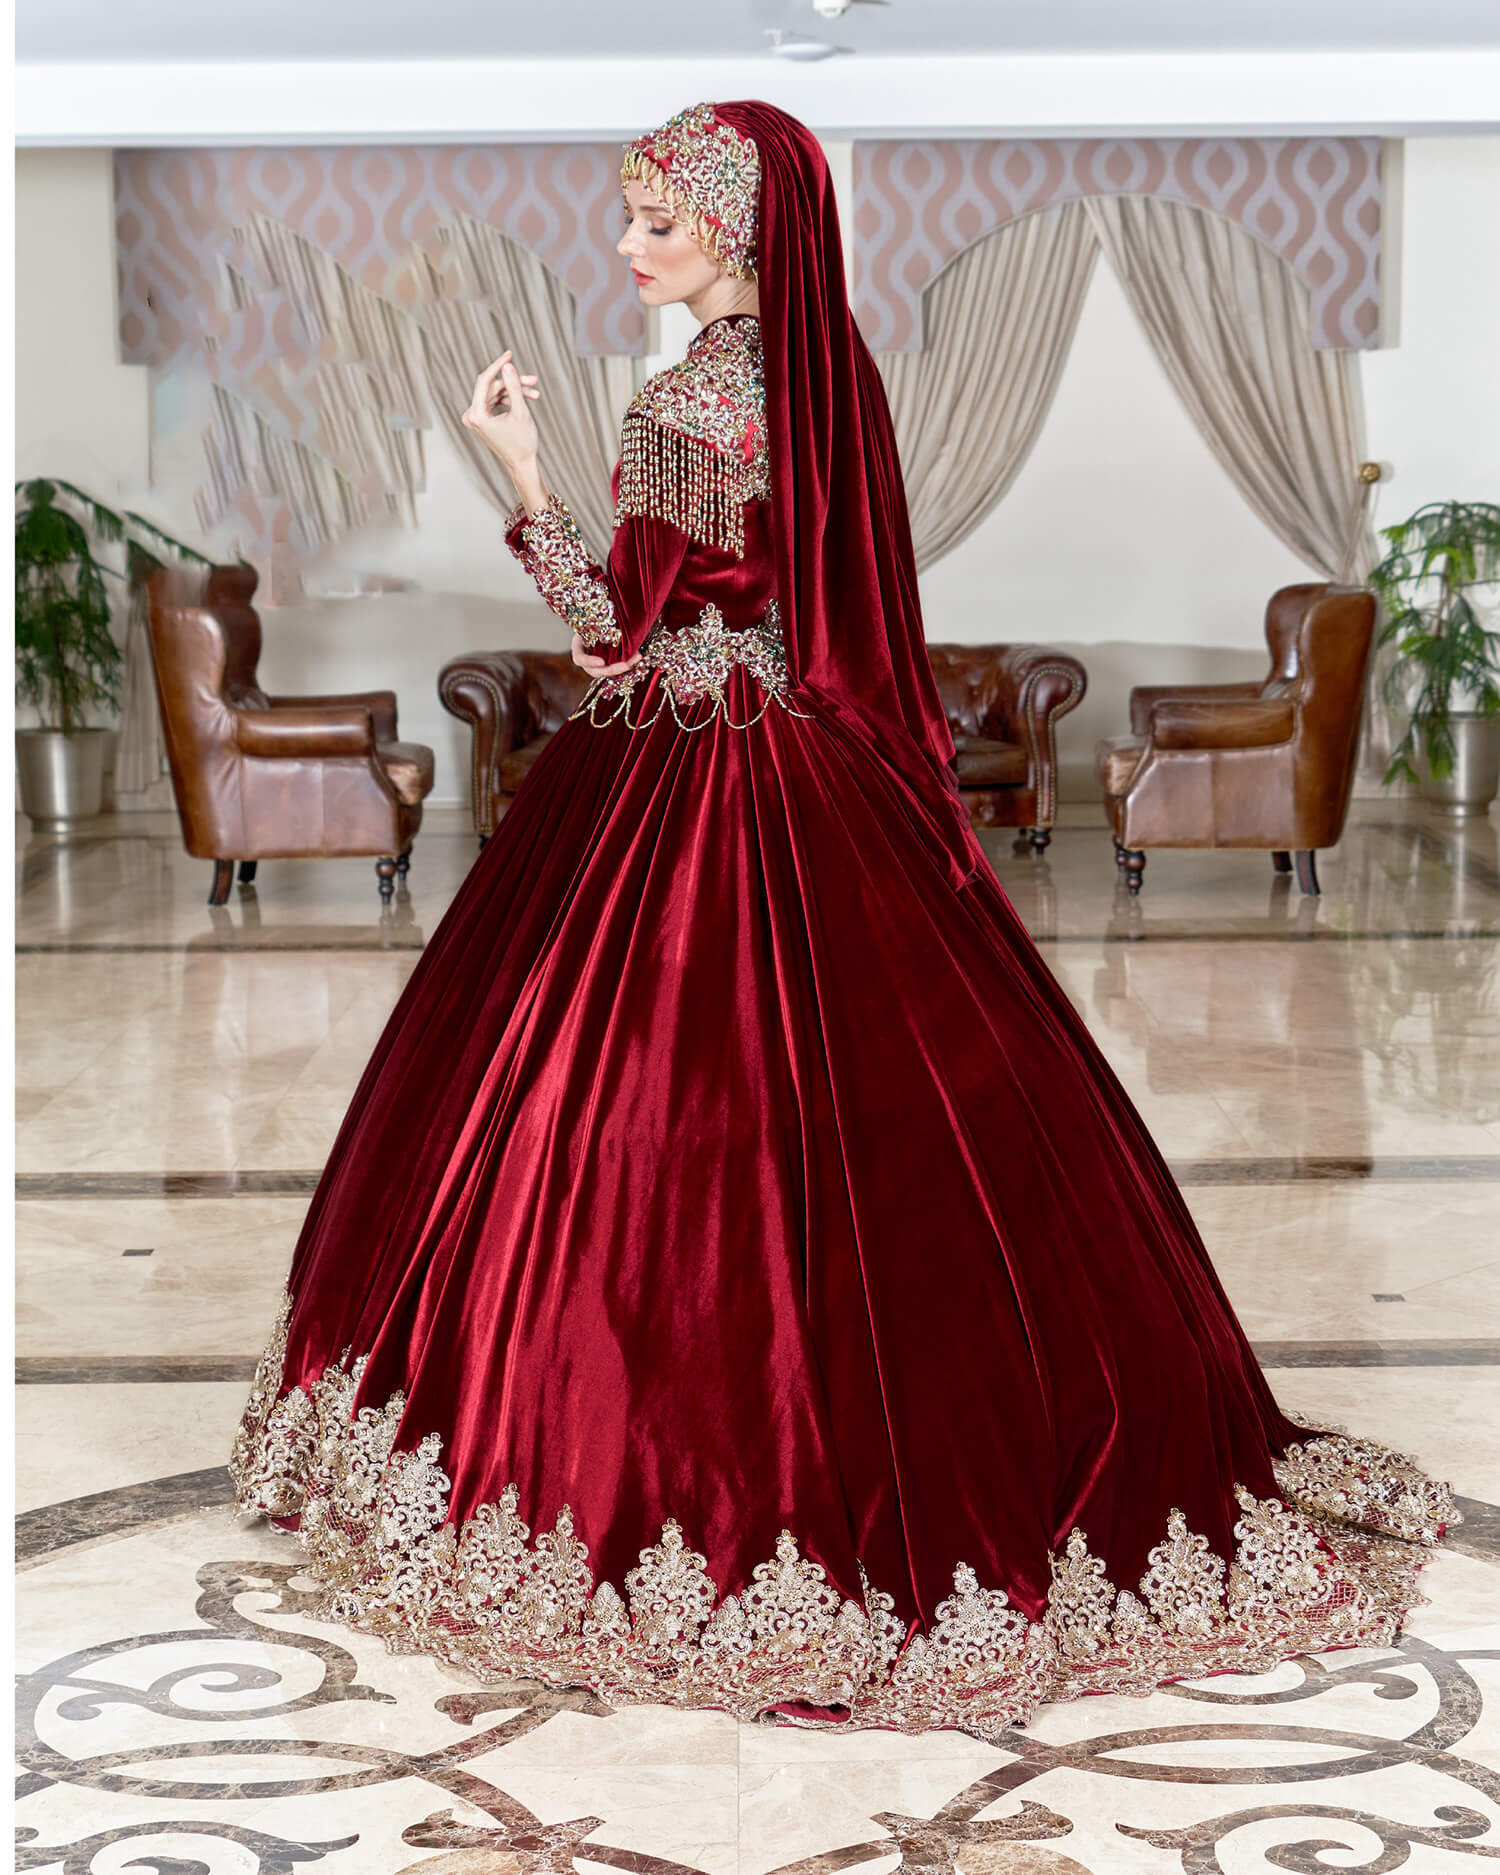 Fluffy Claret Red Hijab Henna Dress